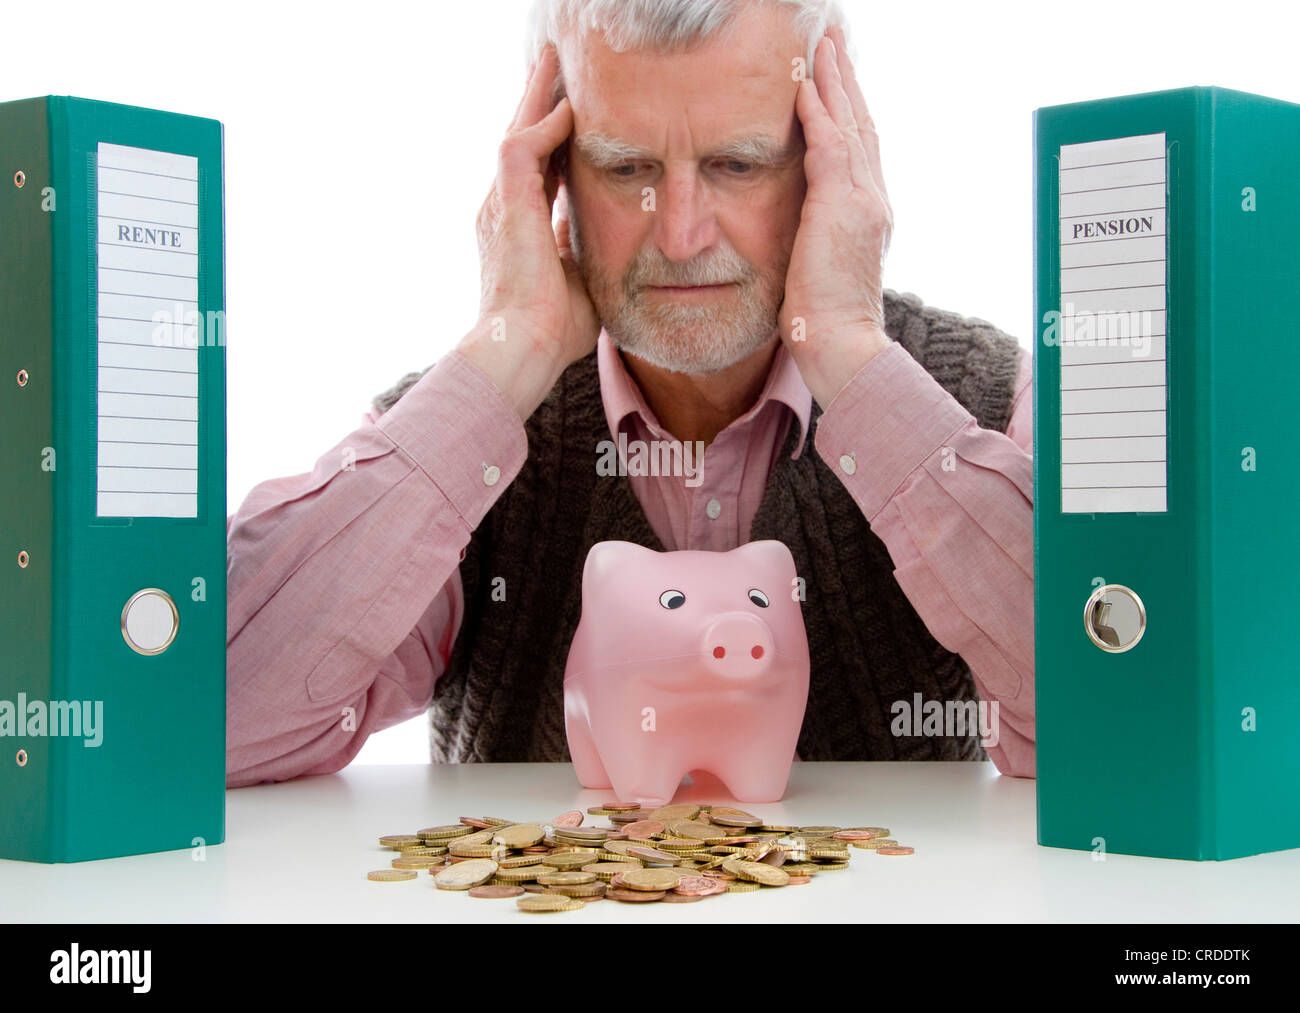 retiree with money troubles Stock Photo